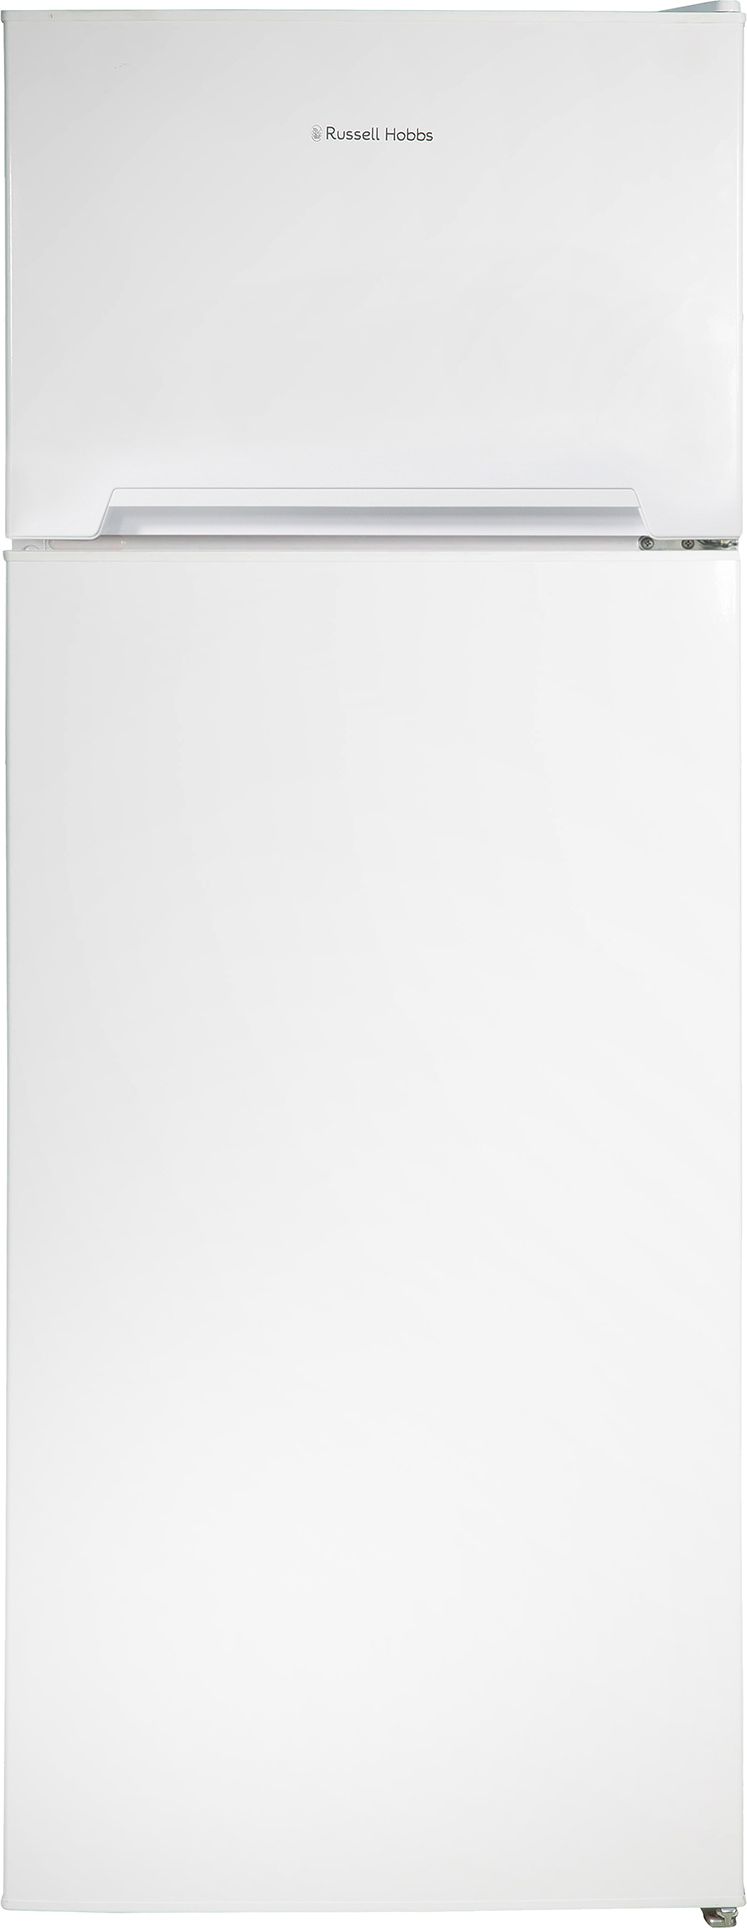 Russell Hobbs RH144TMFF54 Compact 145cm High 80/20 Fridge Freezer - White - F Rated, White